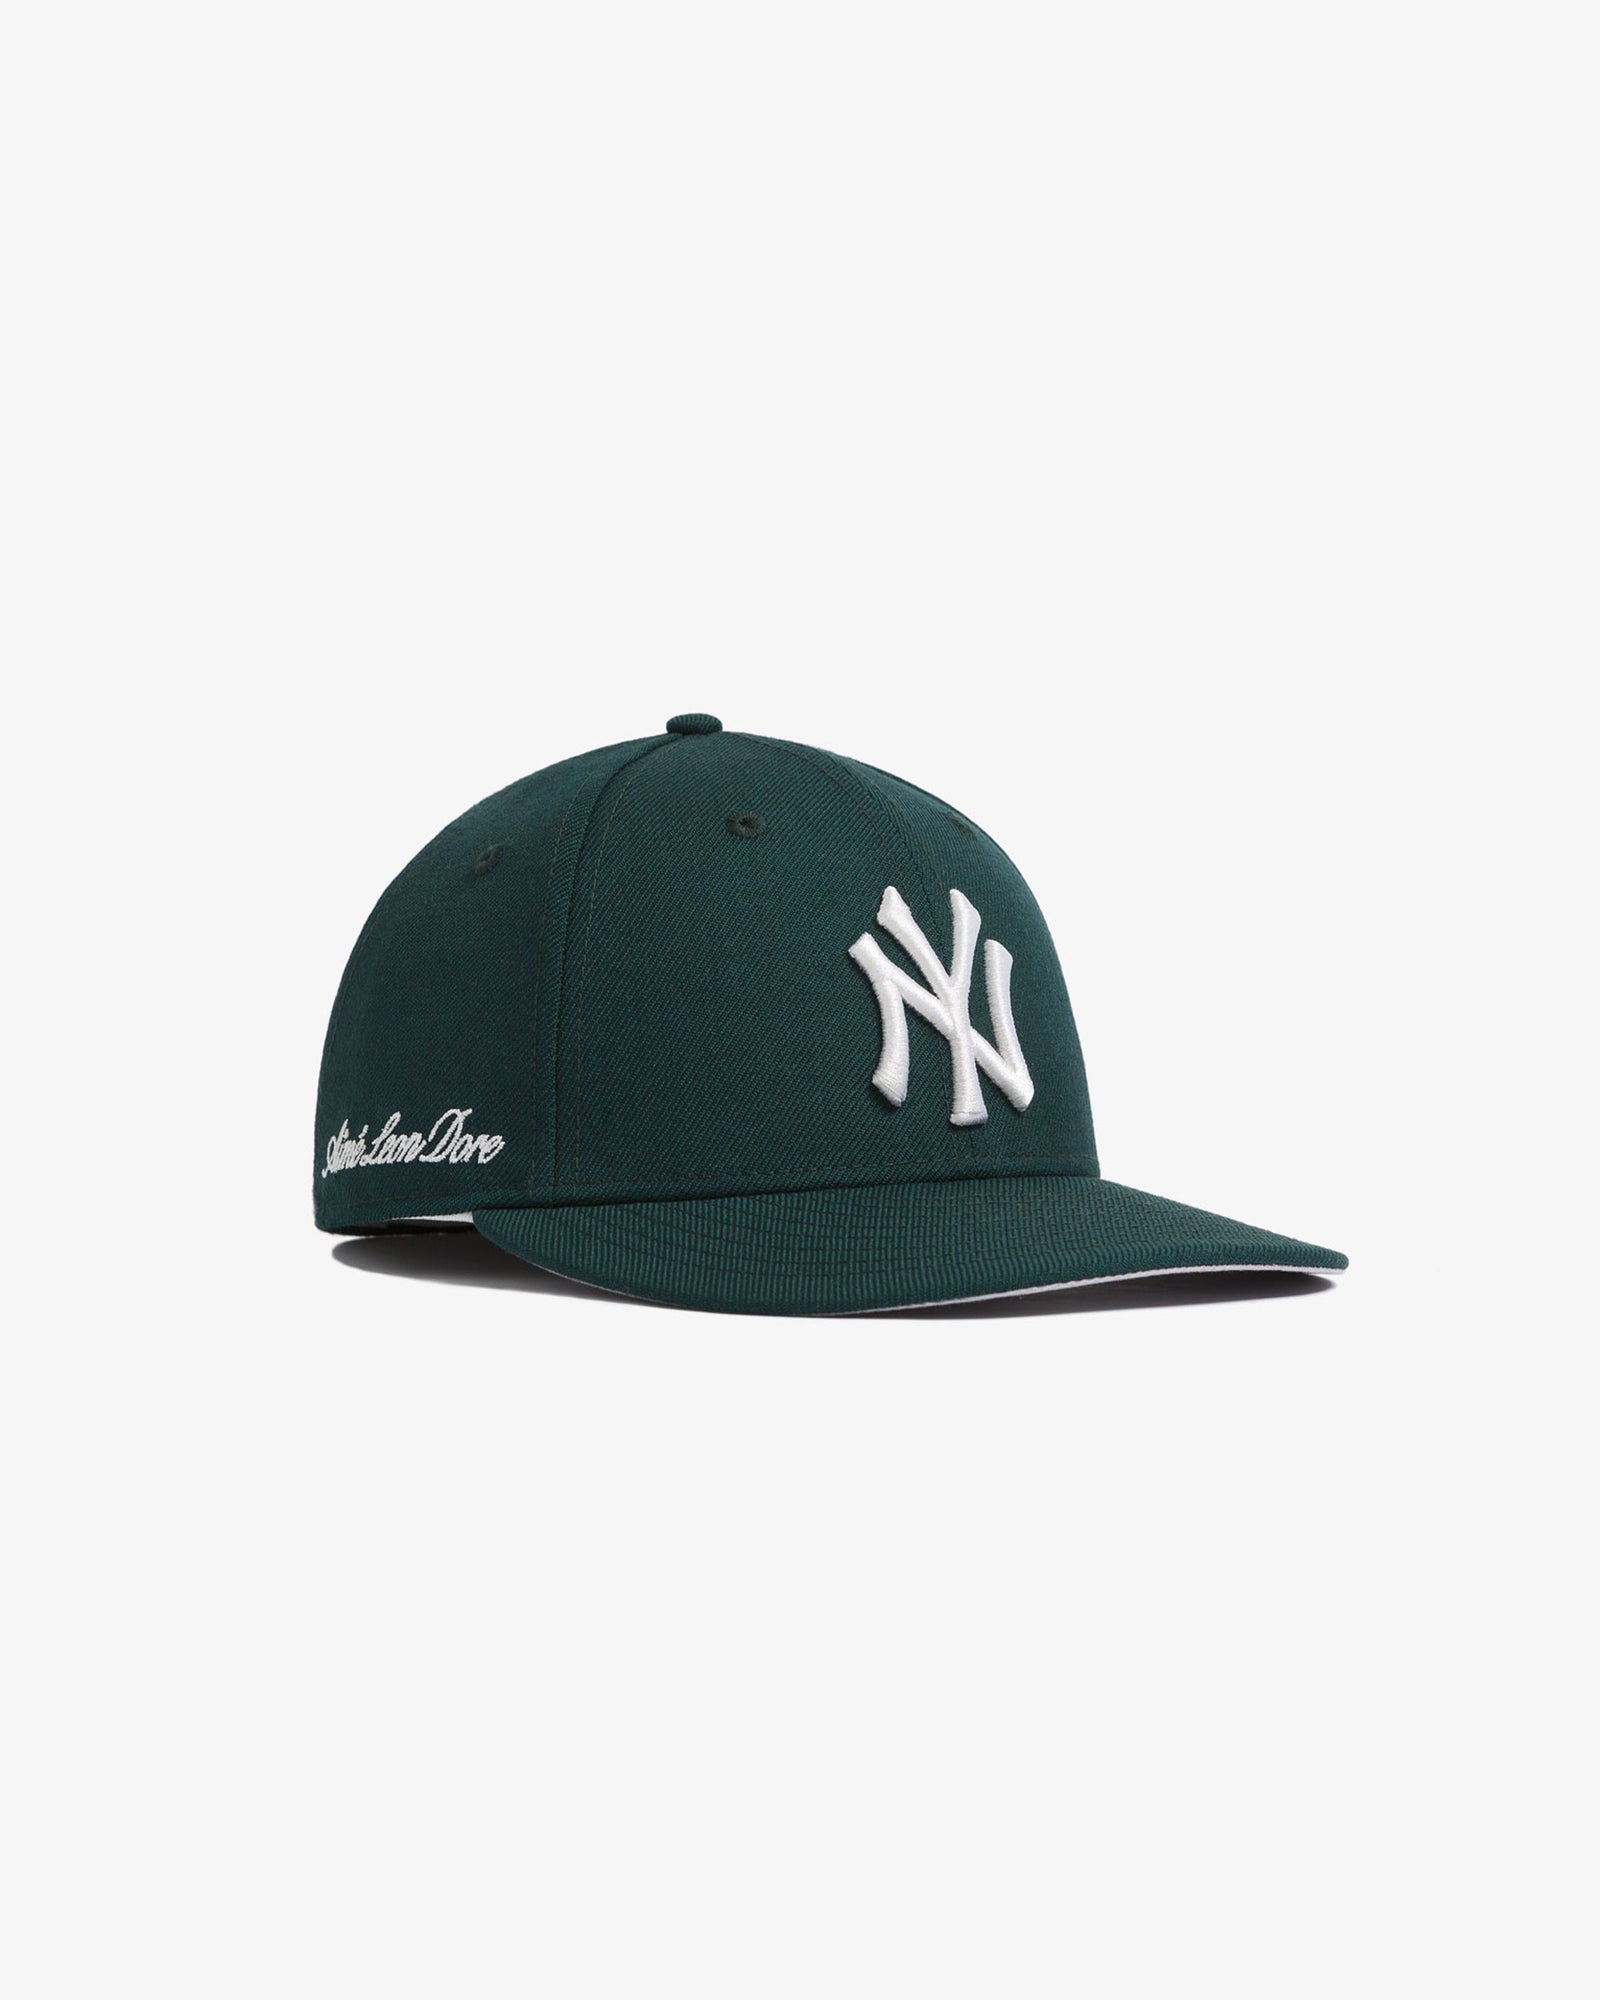 Yankees Baseball Cap